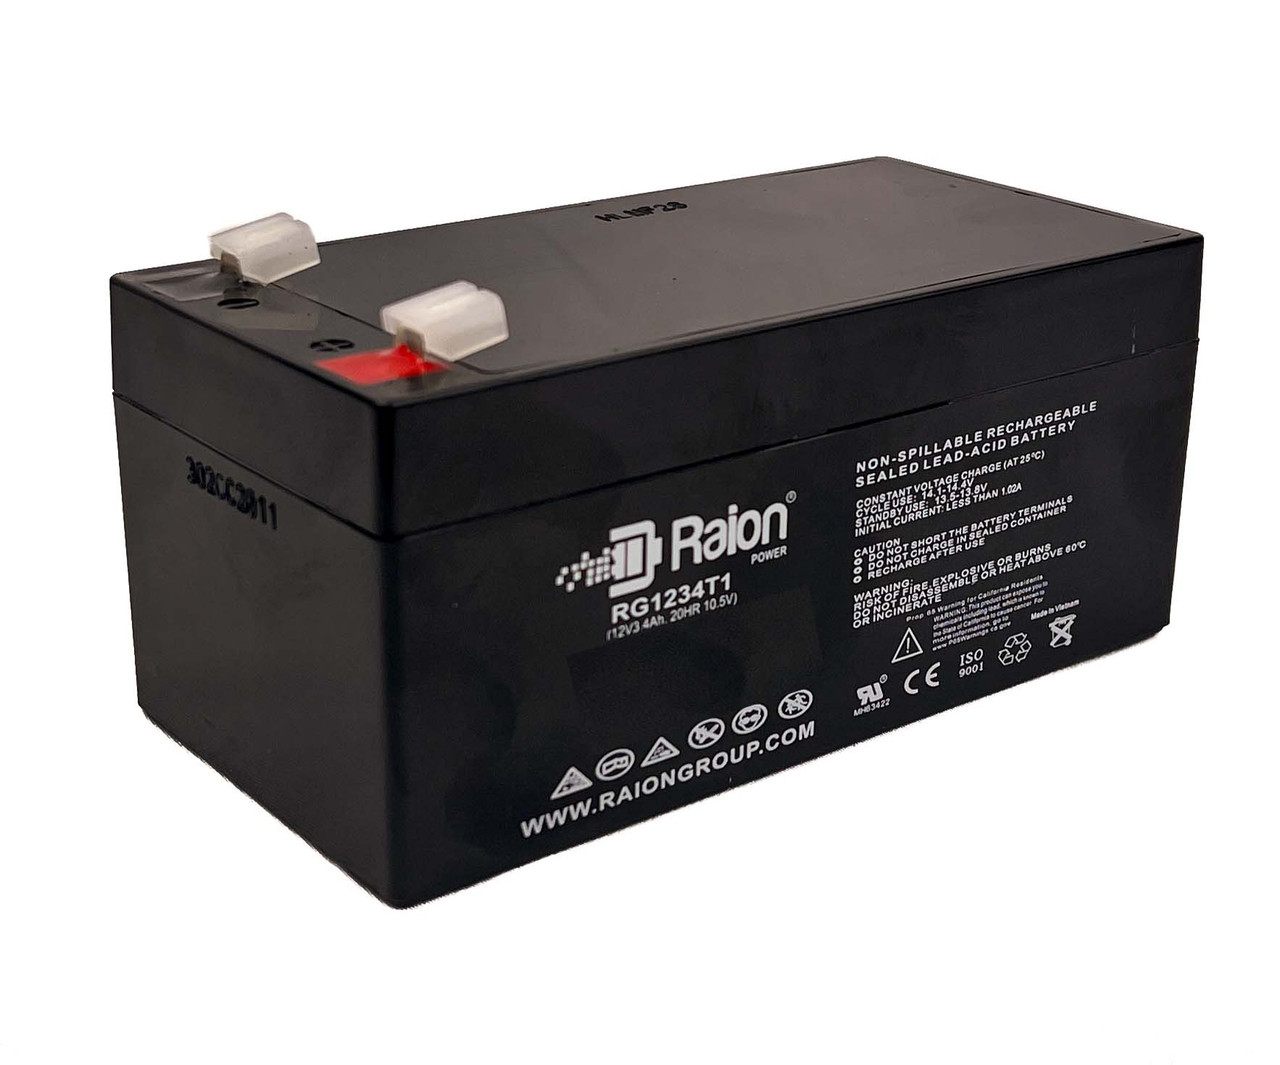 Raion Power 12V 3.4Ah Non-Spillable Replacement Battery for POWERGOR SB12-3.4